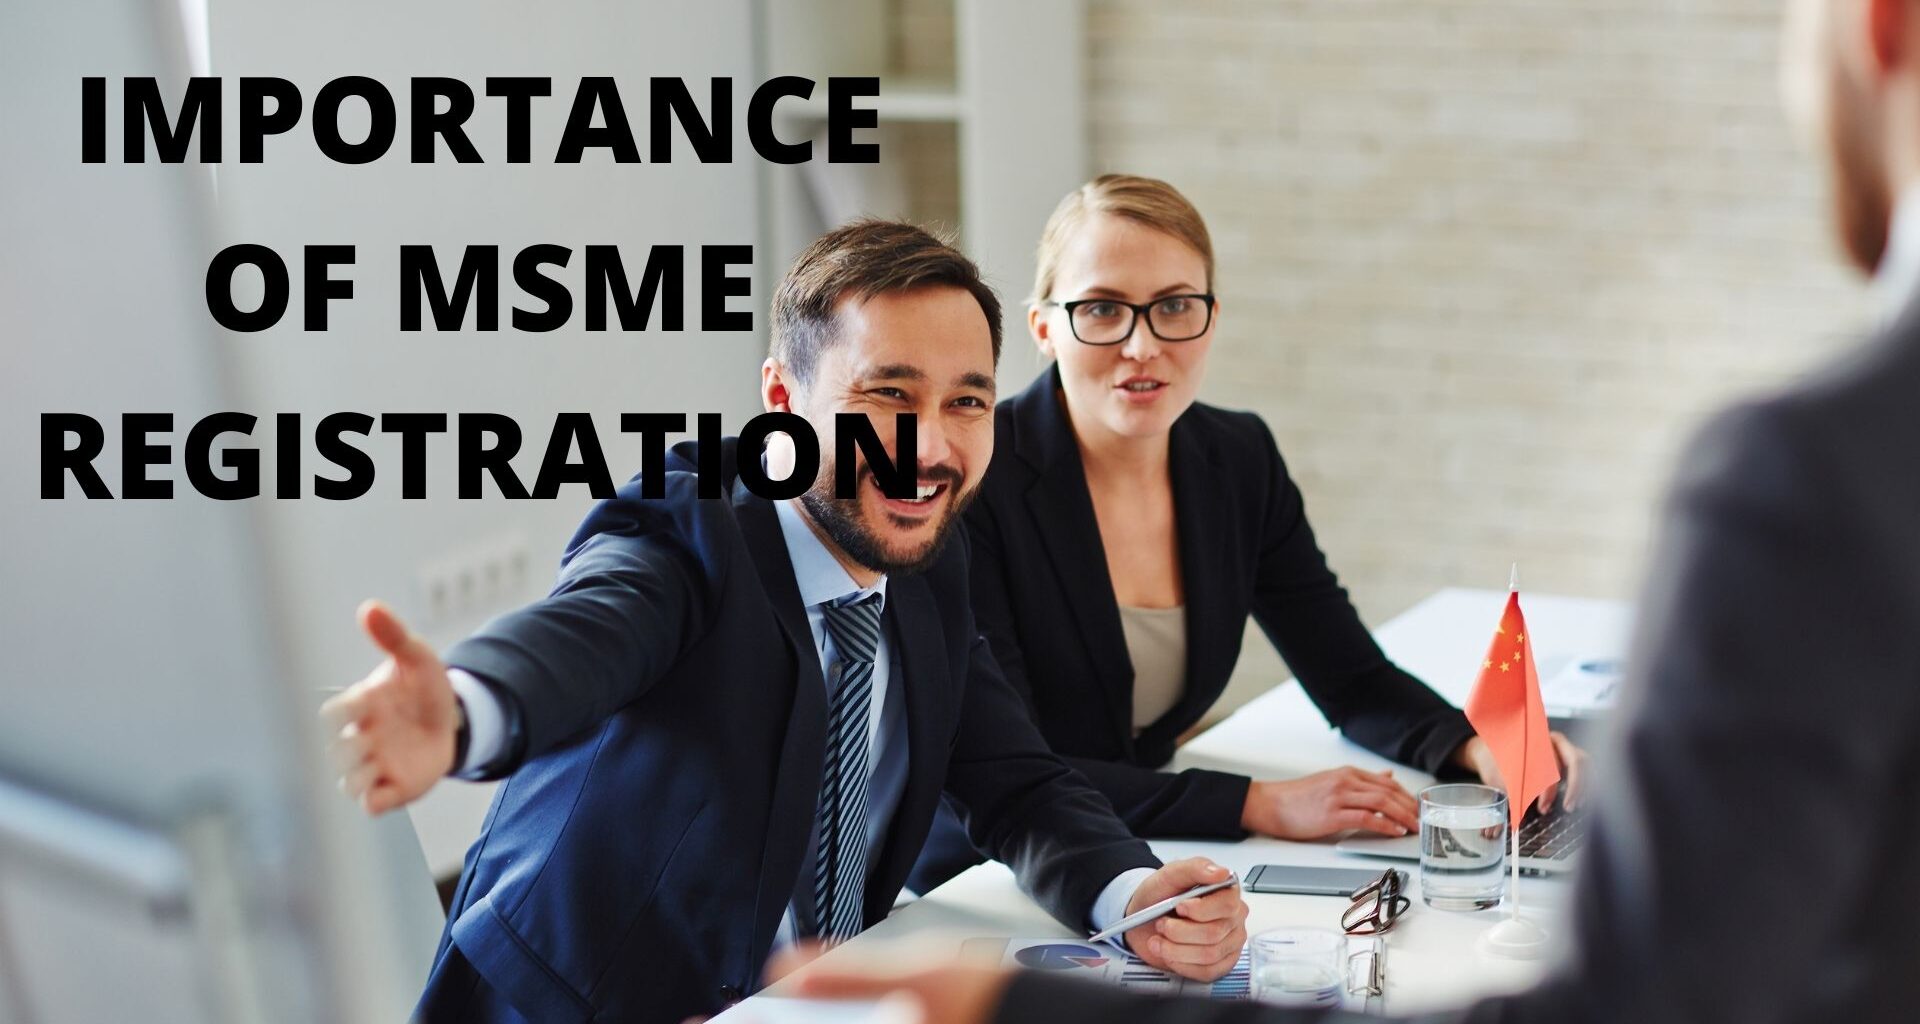 IMPORTANCE OF MSME REGISTRATION